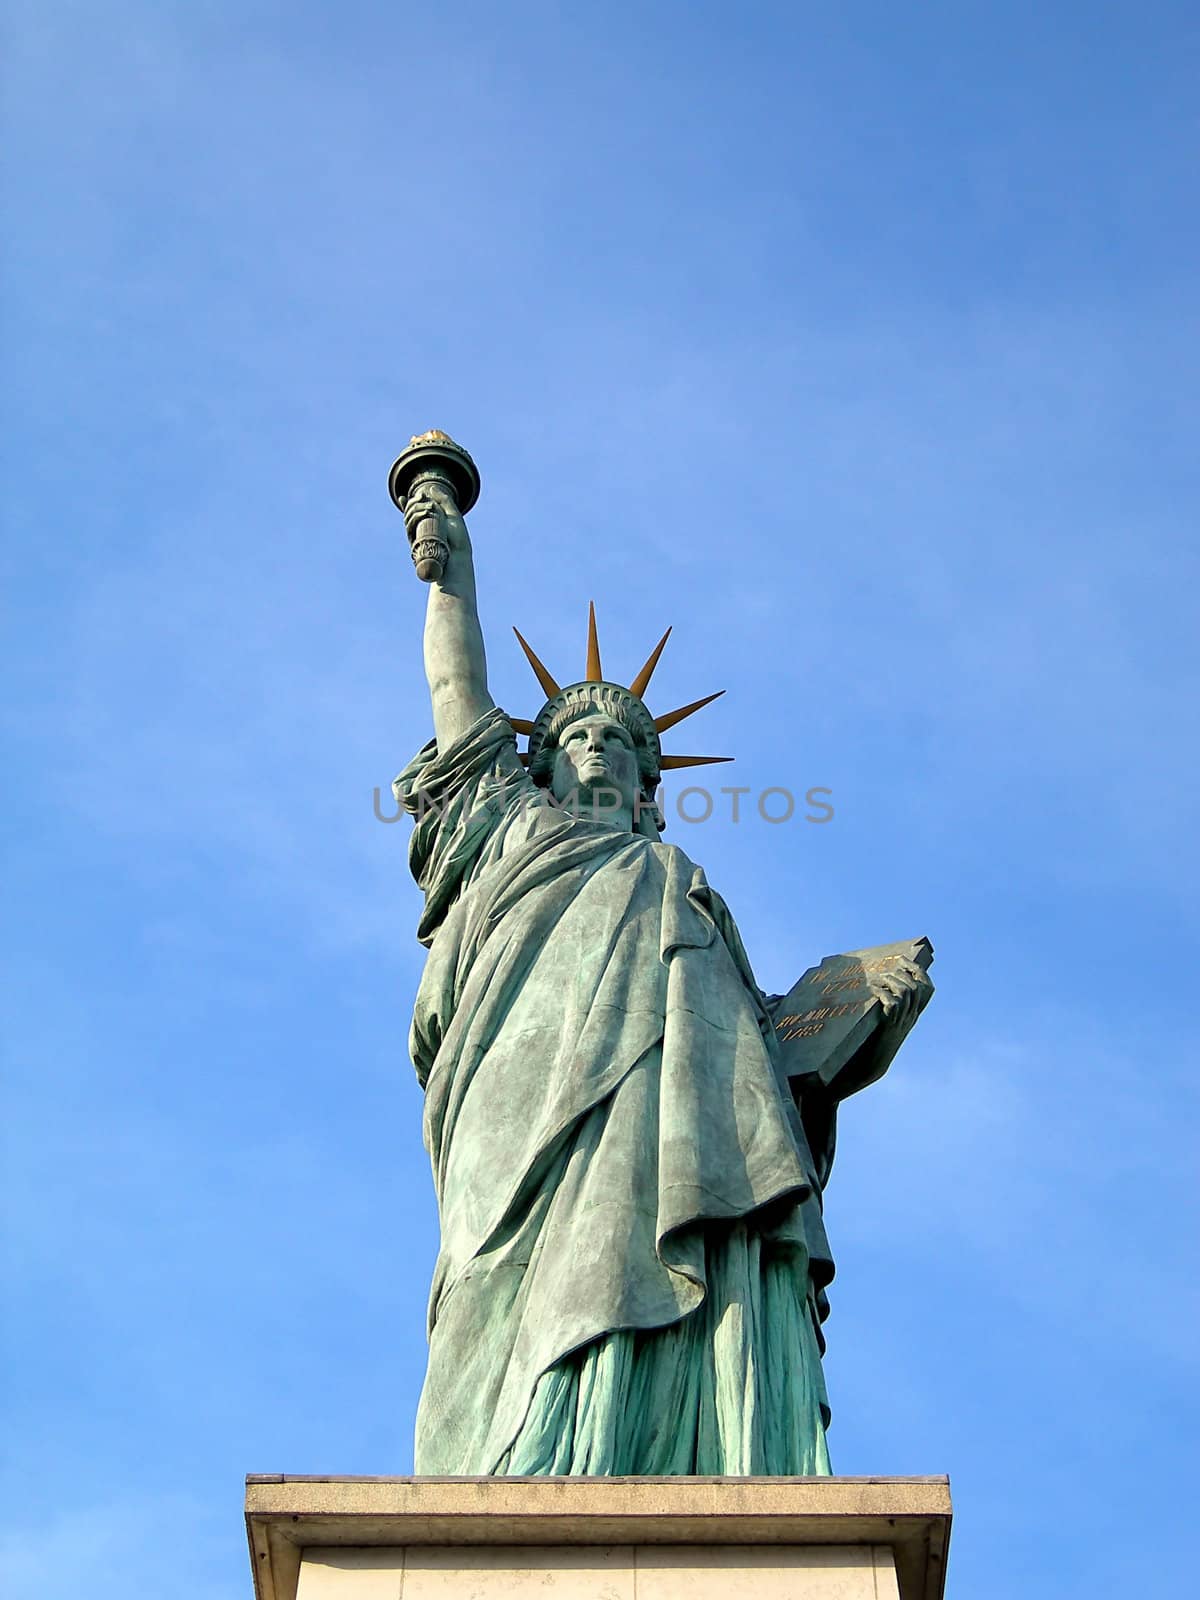 parisian statue of liberty by drakodav